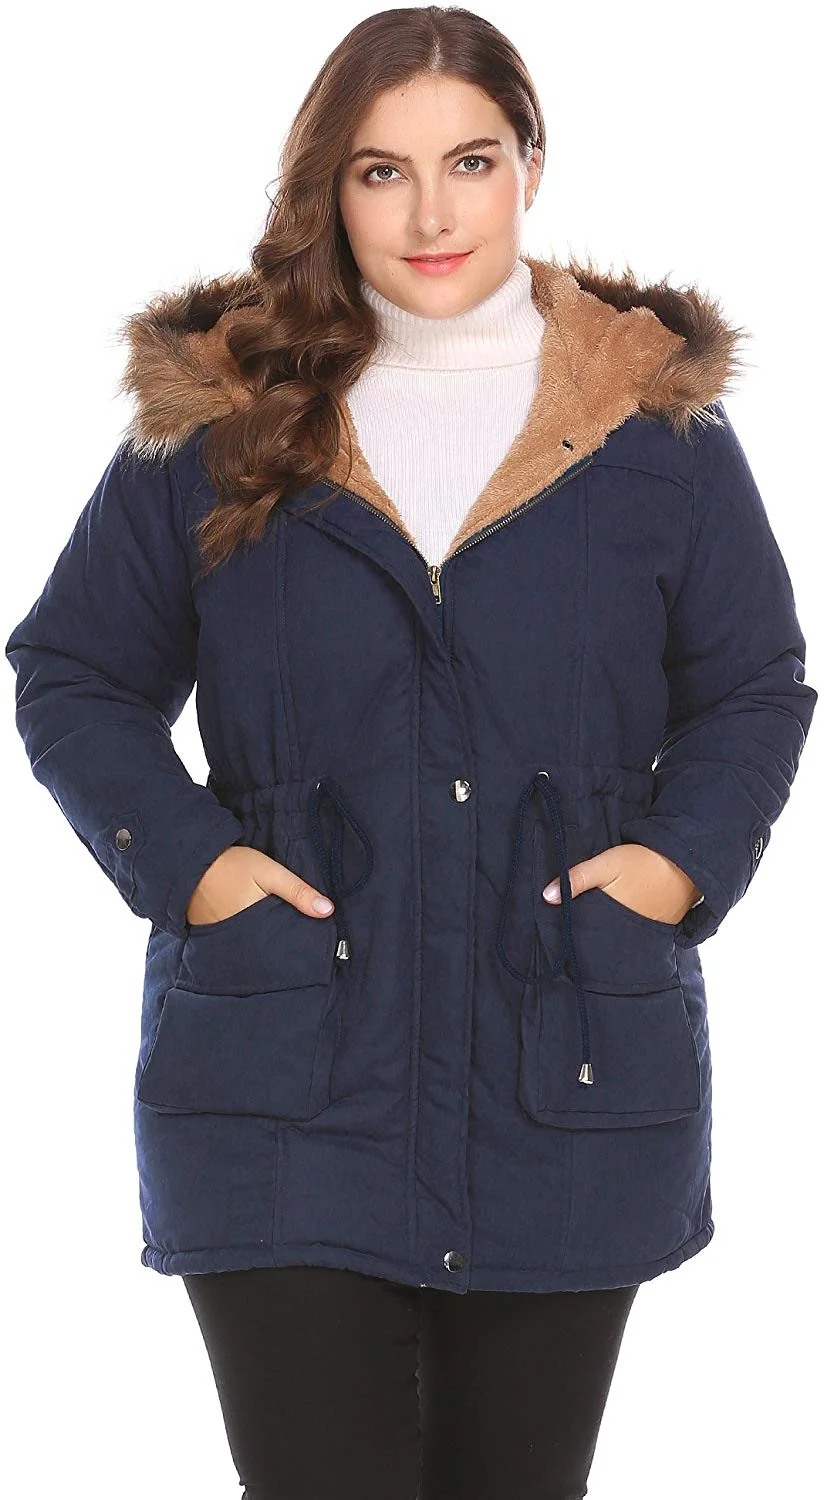 Womens Plus Size Military Hooded Warm Winter Faux Fur Lined Parkas Anroaks Long Coats